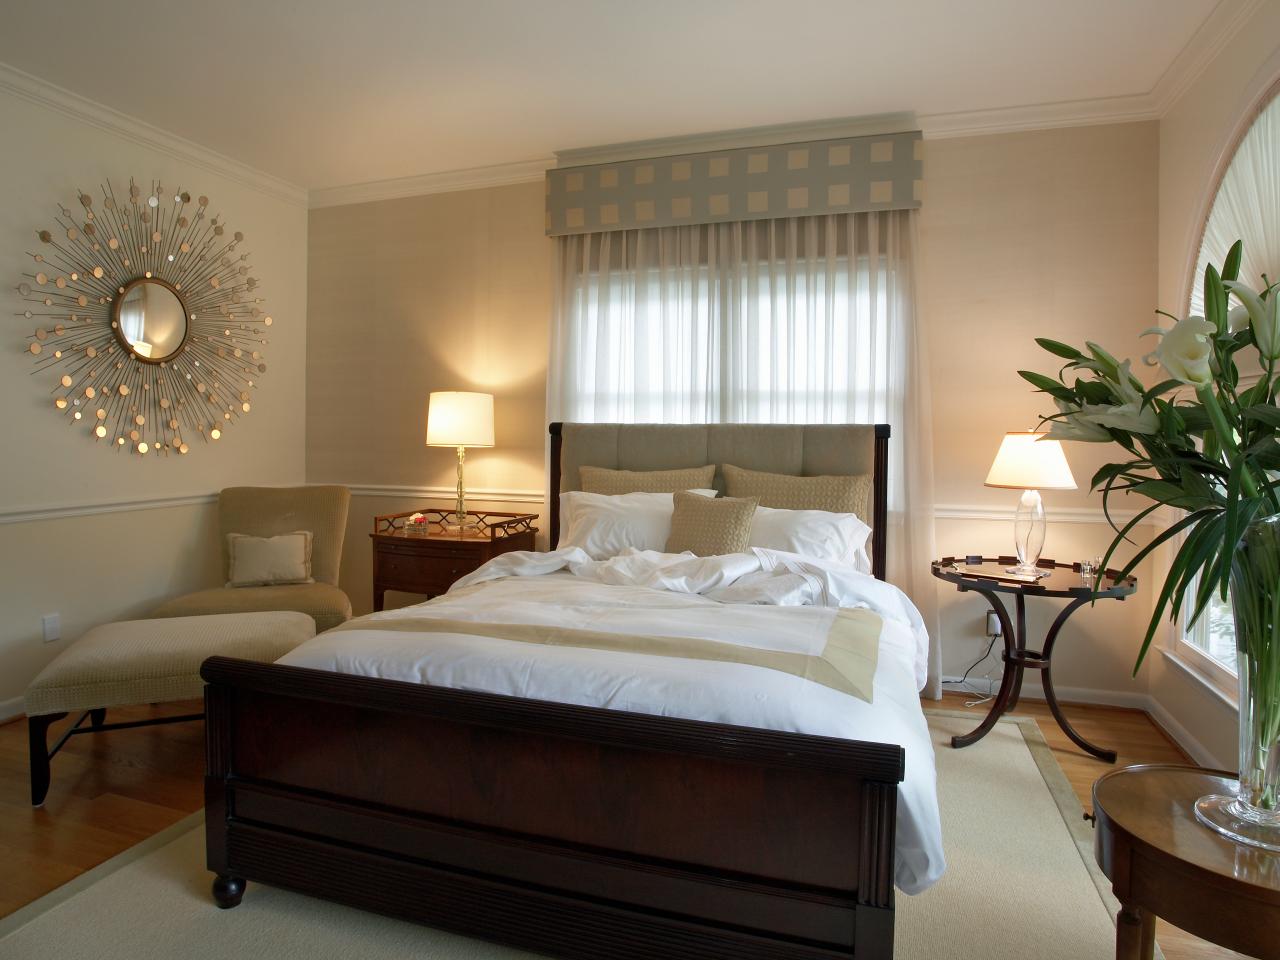 Warm Bedroom Color Schemes Pictures Options Ideas HGTV